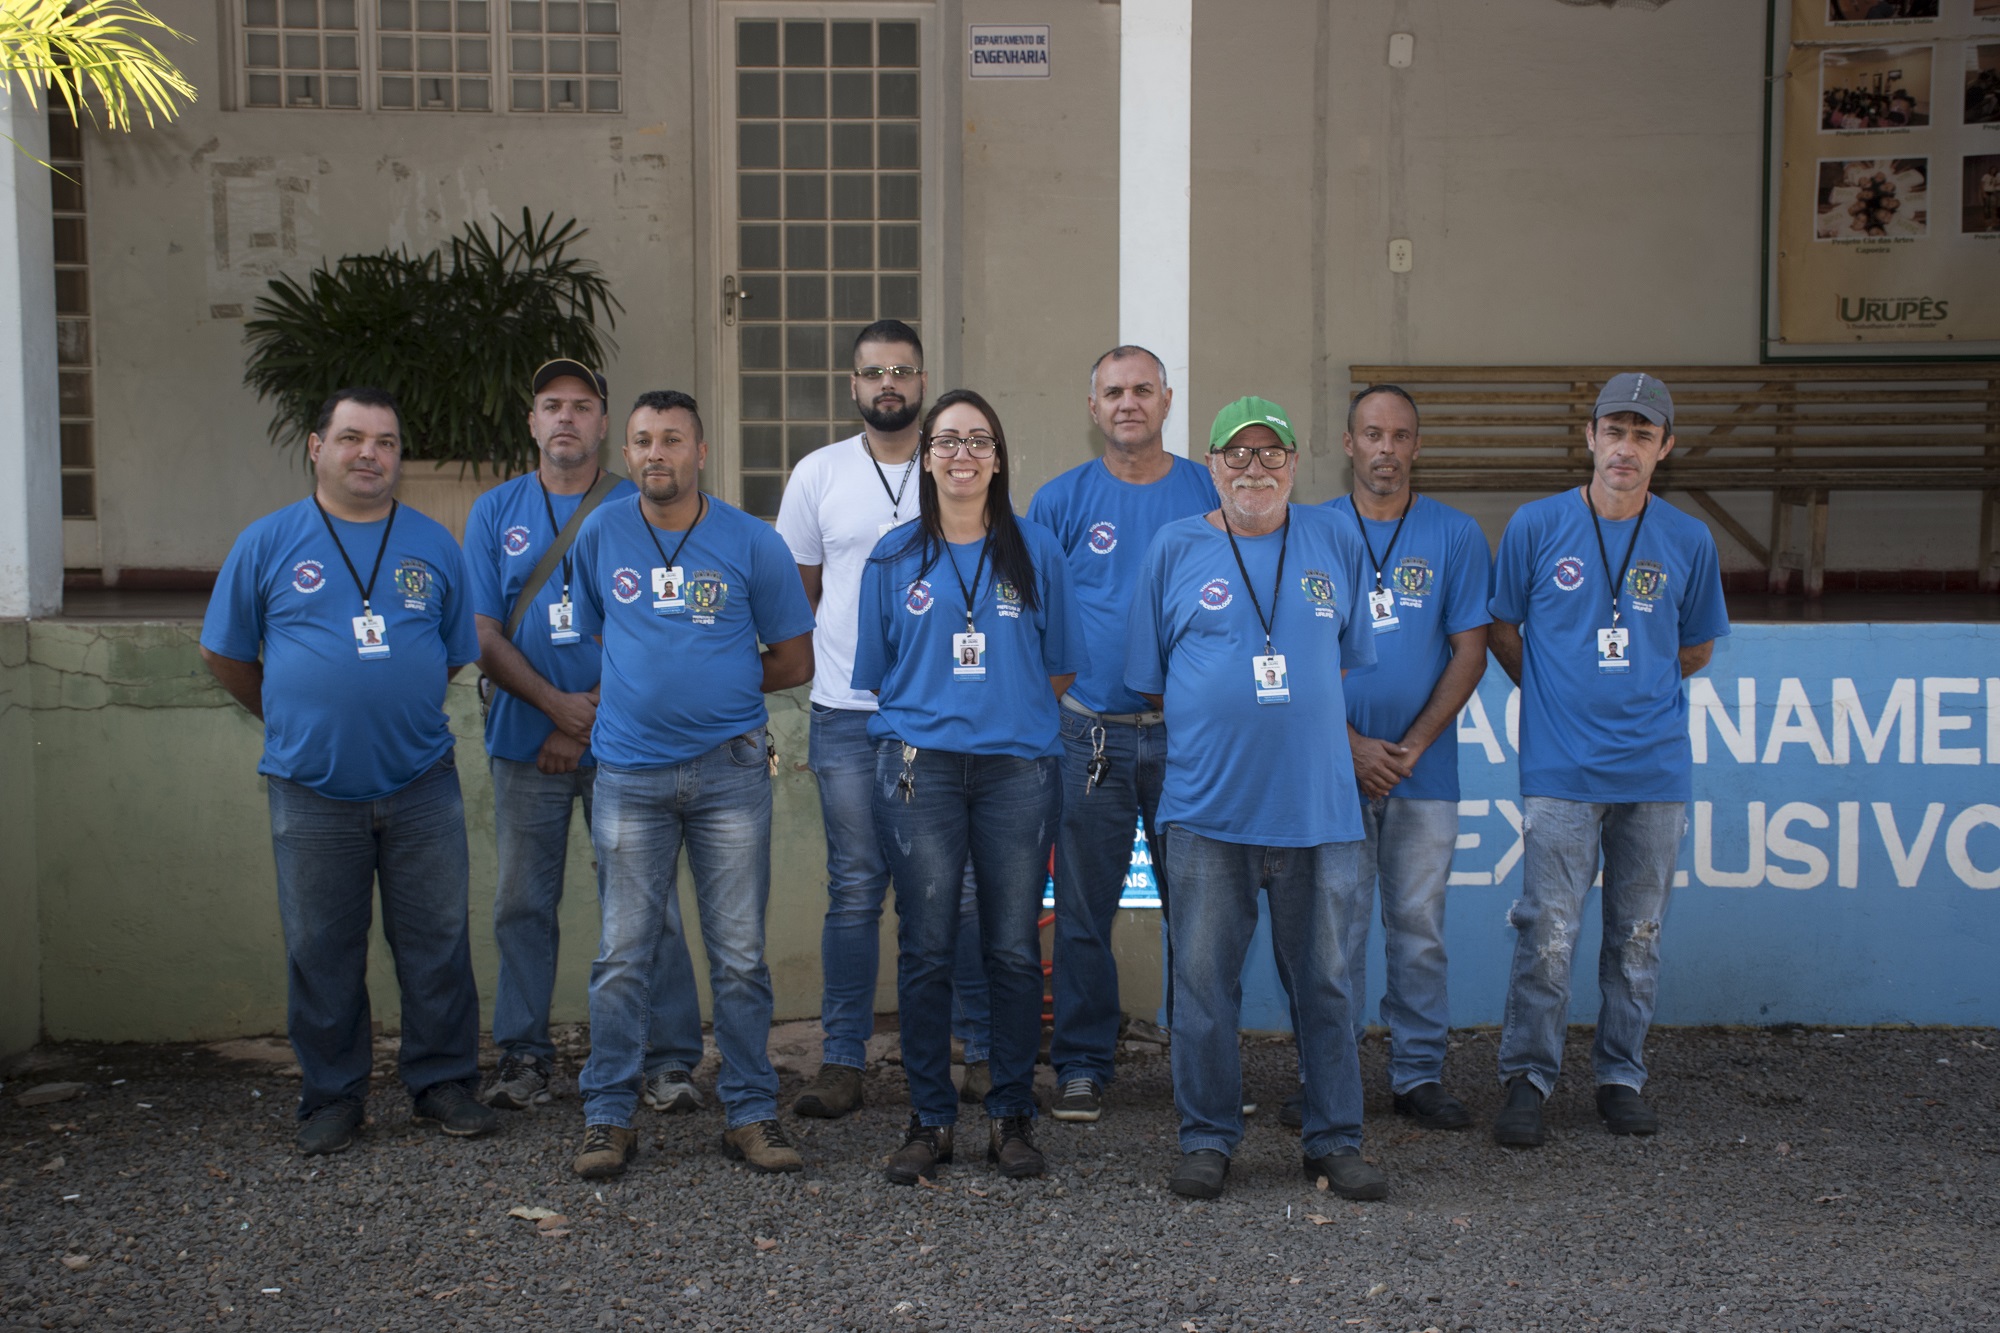 Equipe do Controle de Endemias de Urupês, que realiza as visitas nas residências da cidade.